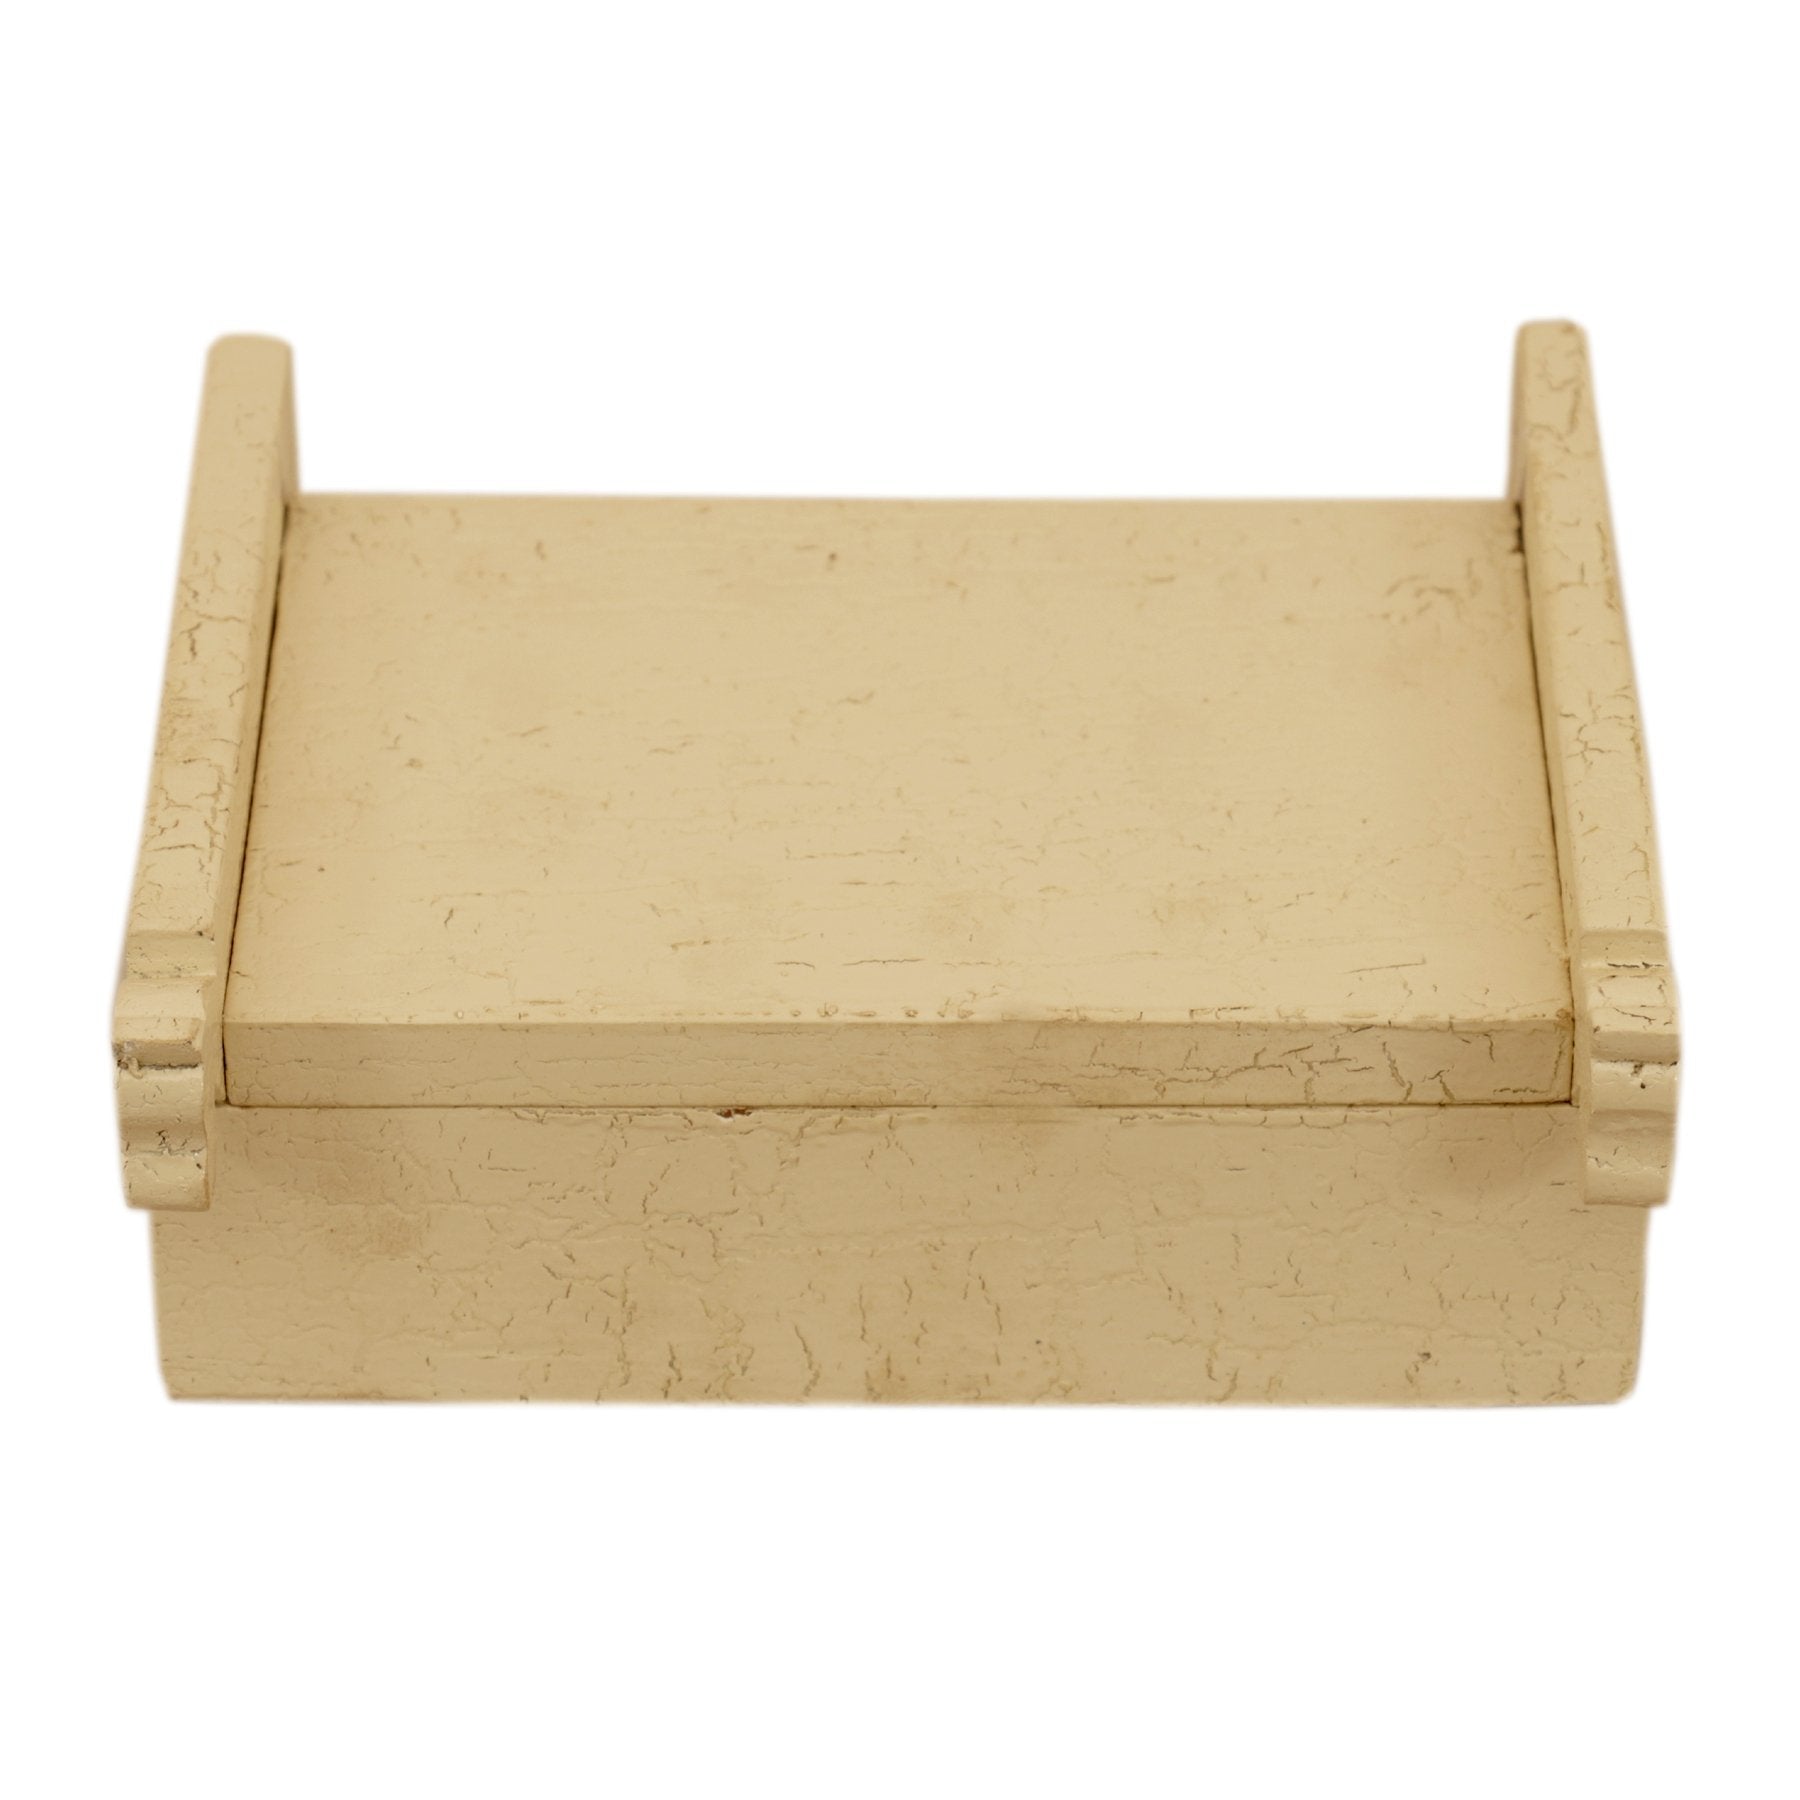 Solid wood Artisan Box Wooden Box